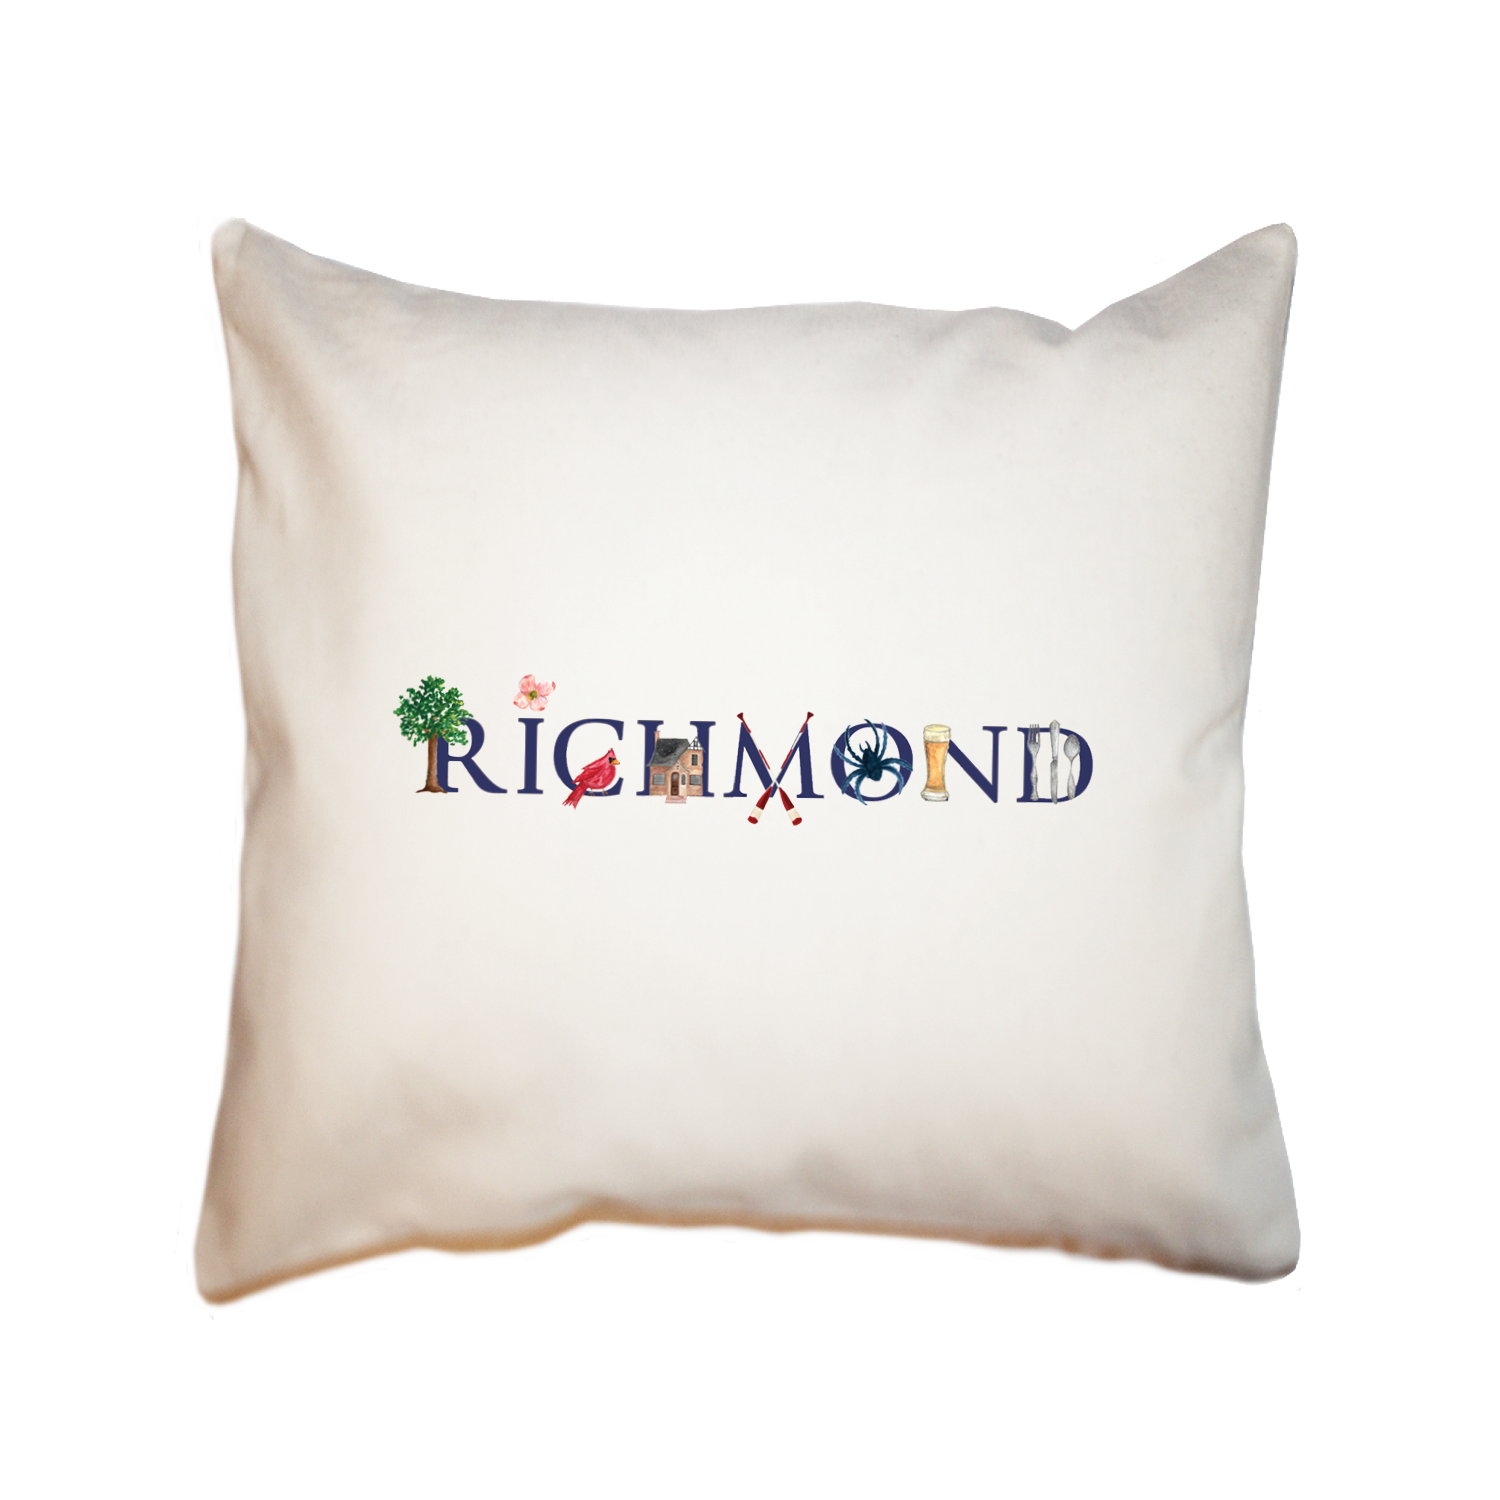 richmond, va square pillow